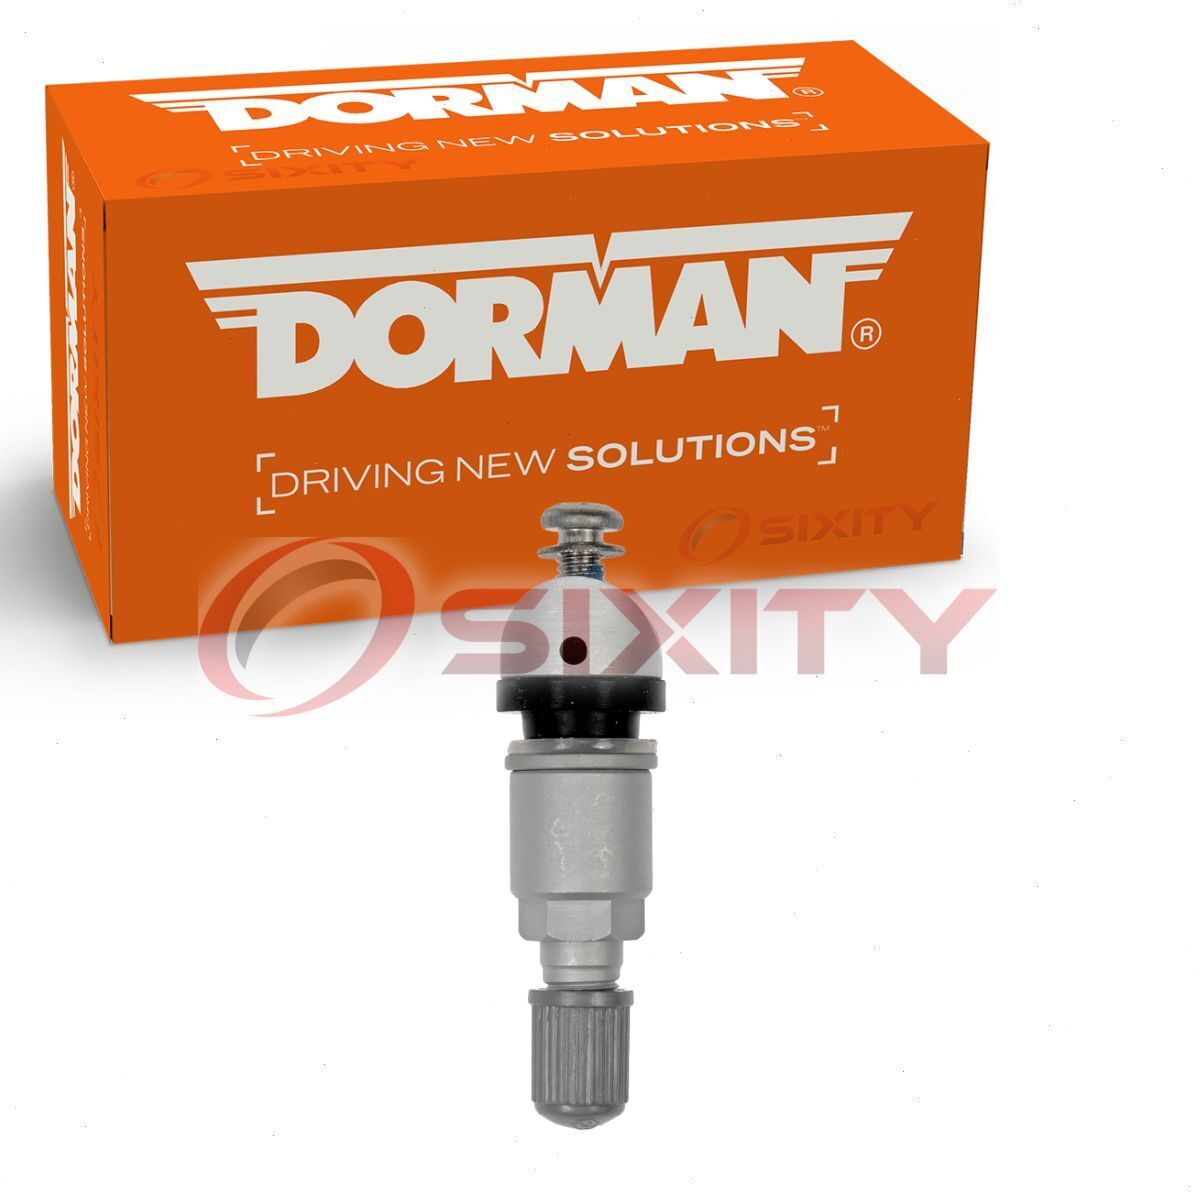 Dorman TPMS Valve Kit for 2007-2008 BMW 335xi Tire Pressure Monitoring xc